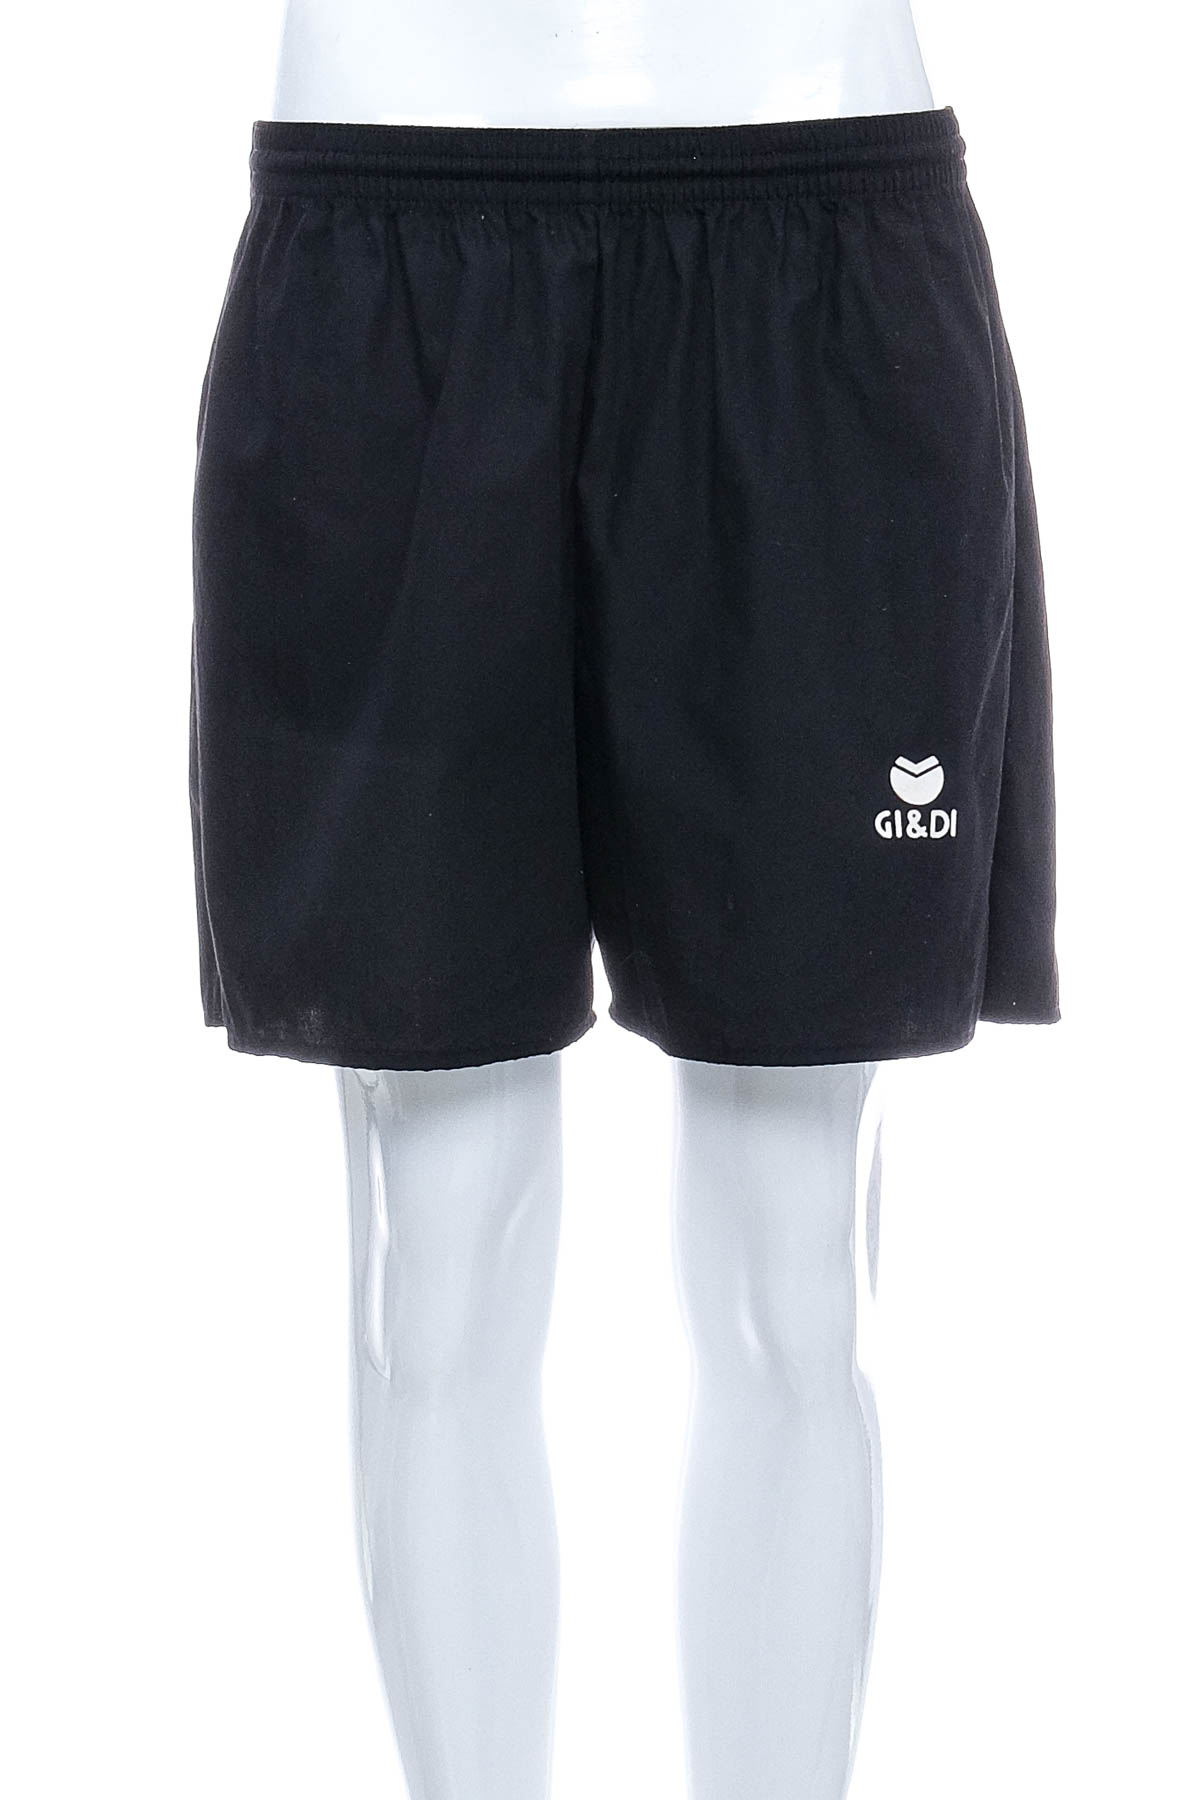 Krótkie spodnie damskie - GI & DI - 0